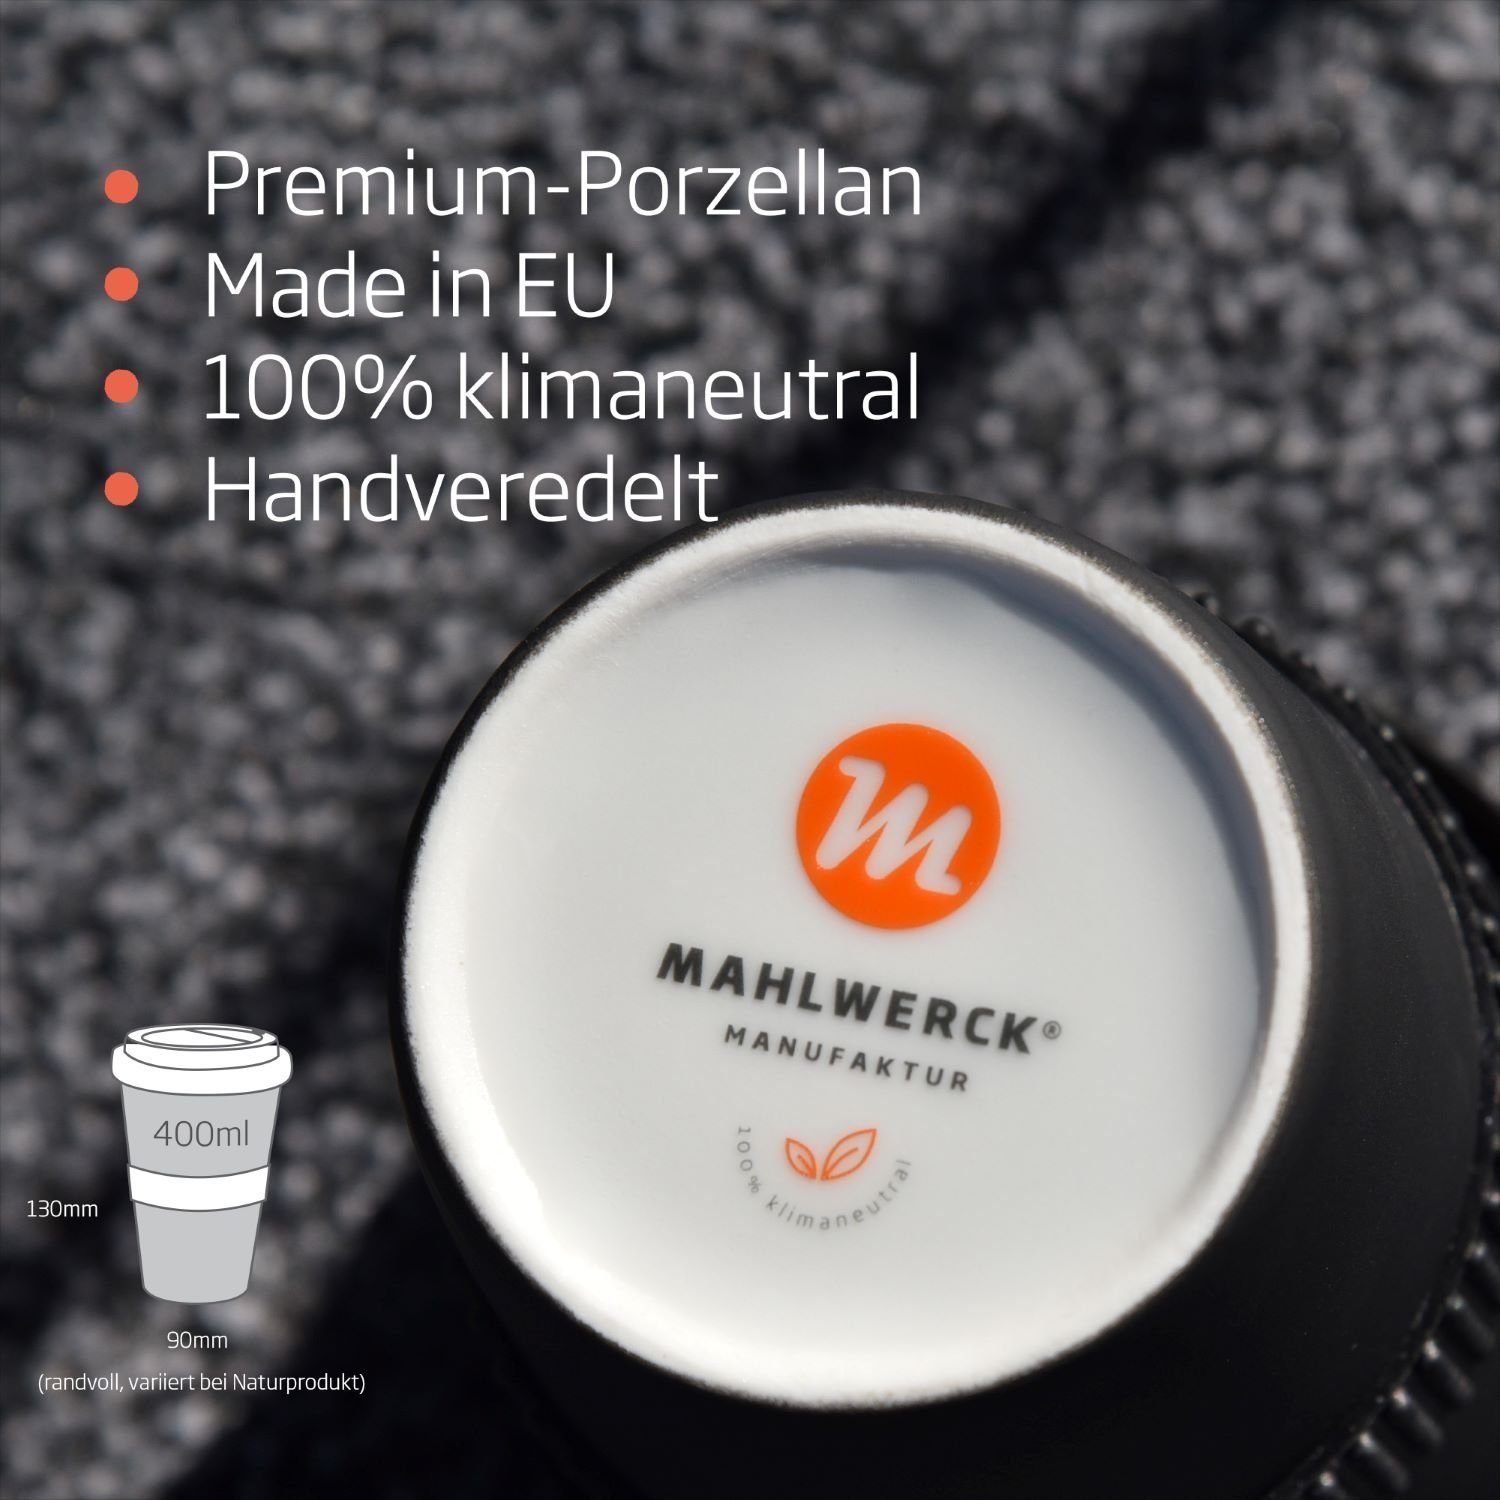 Mahlwerck Manufaktur Coffee-to-go-Becher Limited Edition Amazonas + Green Prorzellan, 400 spülmaschinengeeignet, auslaufsicher, 100% klimaneutral Becher Deckel, ml